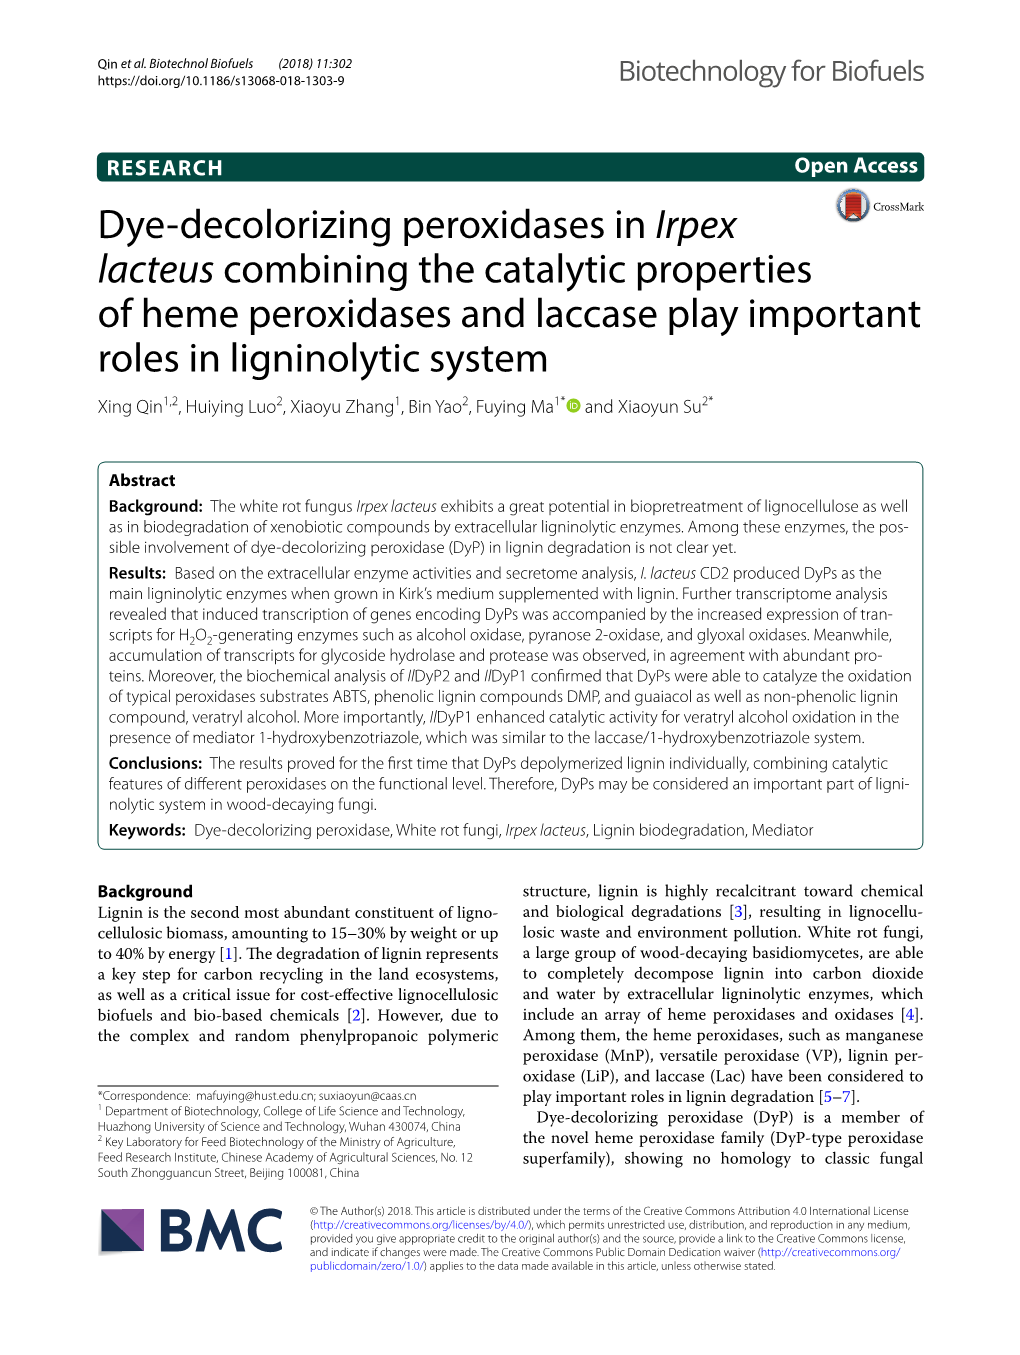 Dye-Decolorizing Peroxidases in Irpex Lacteus Combining the Catalytic